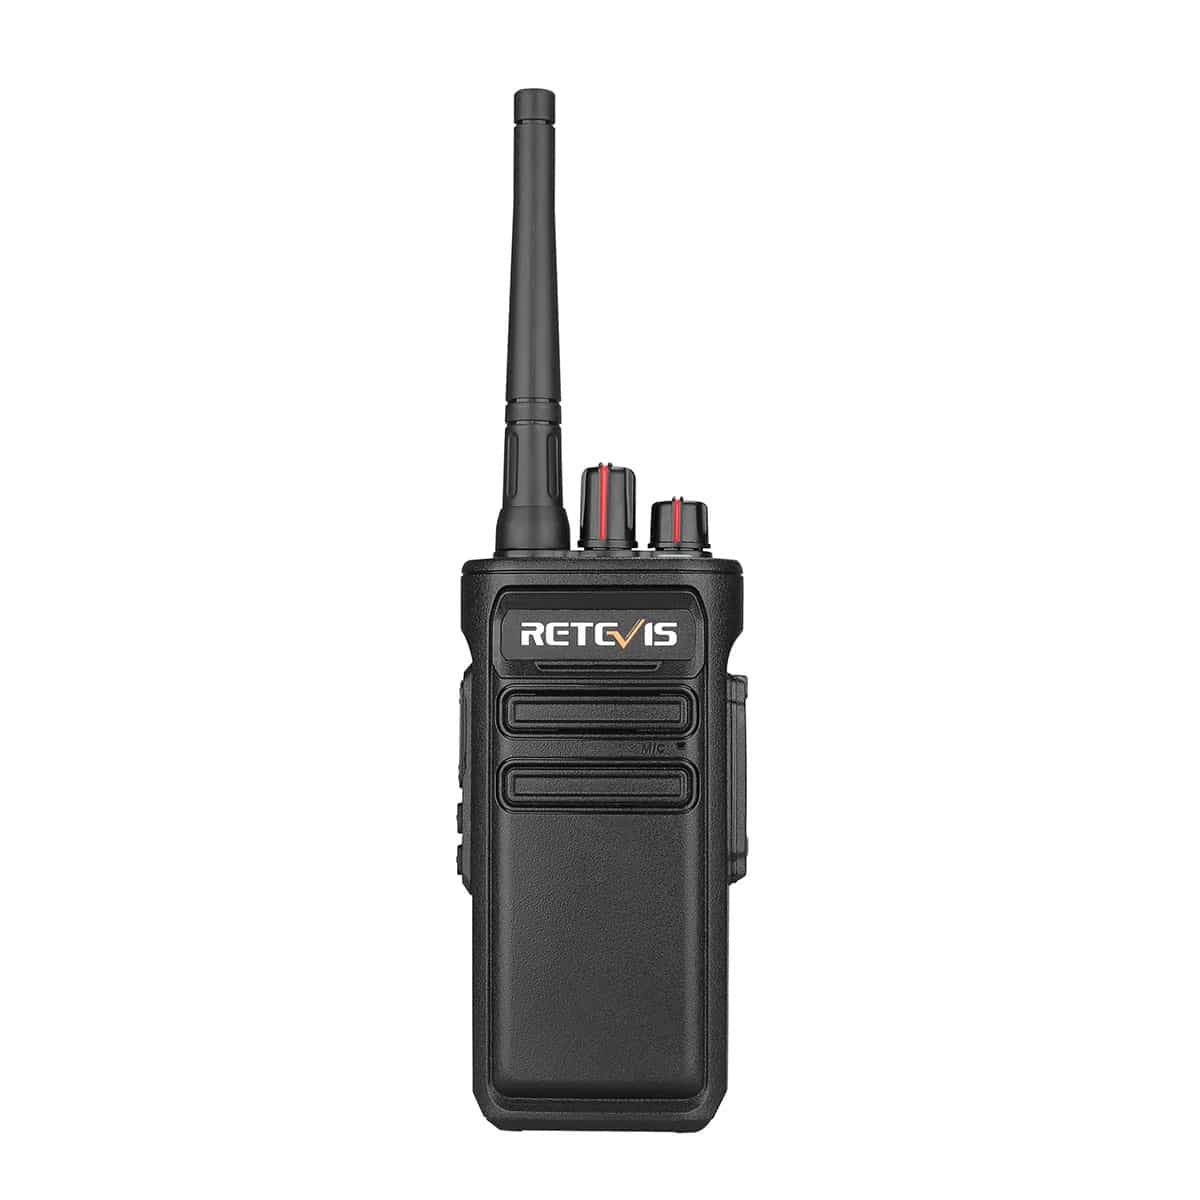 RB23 GMRS Handheld Radio